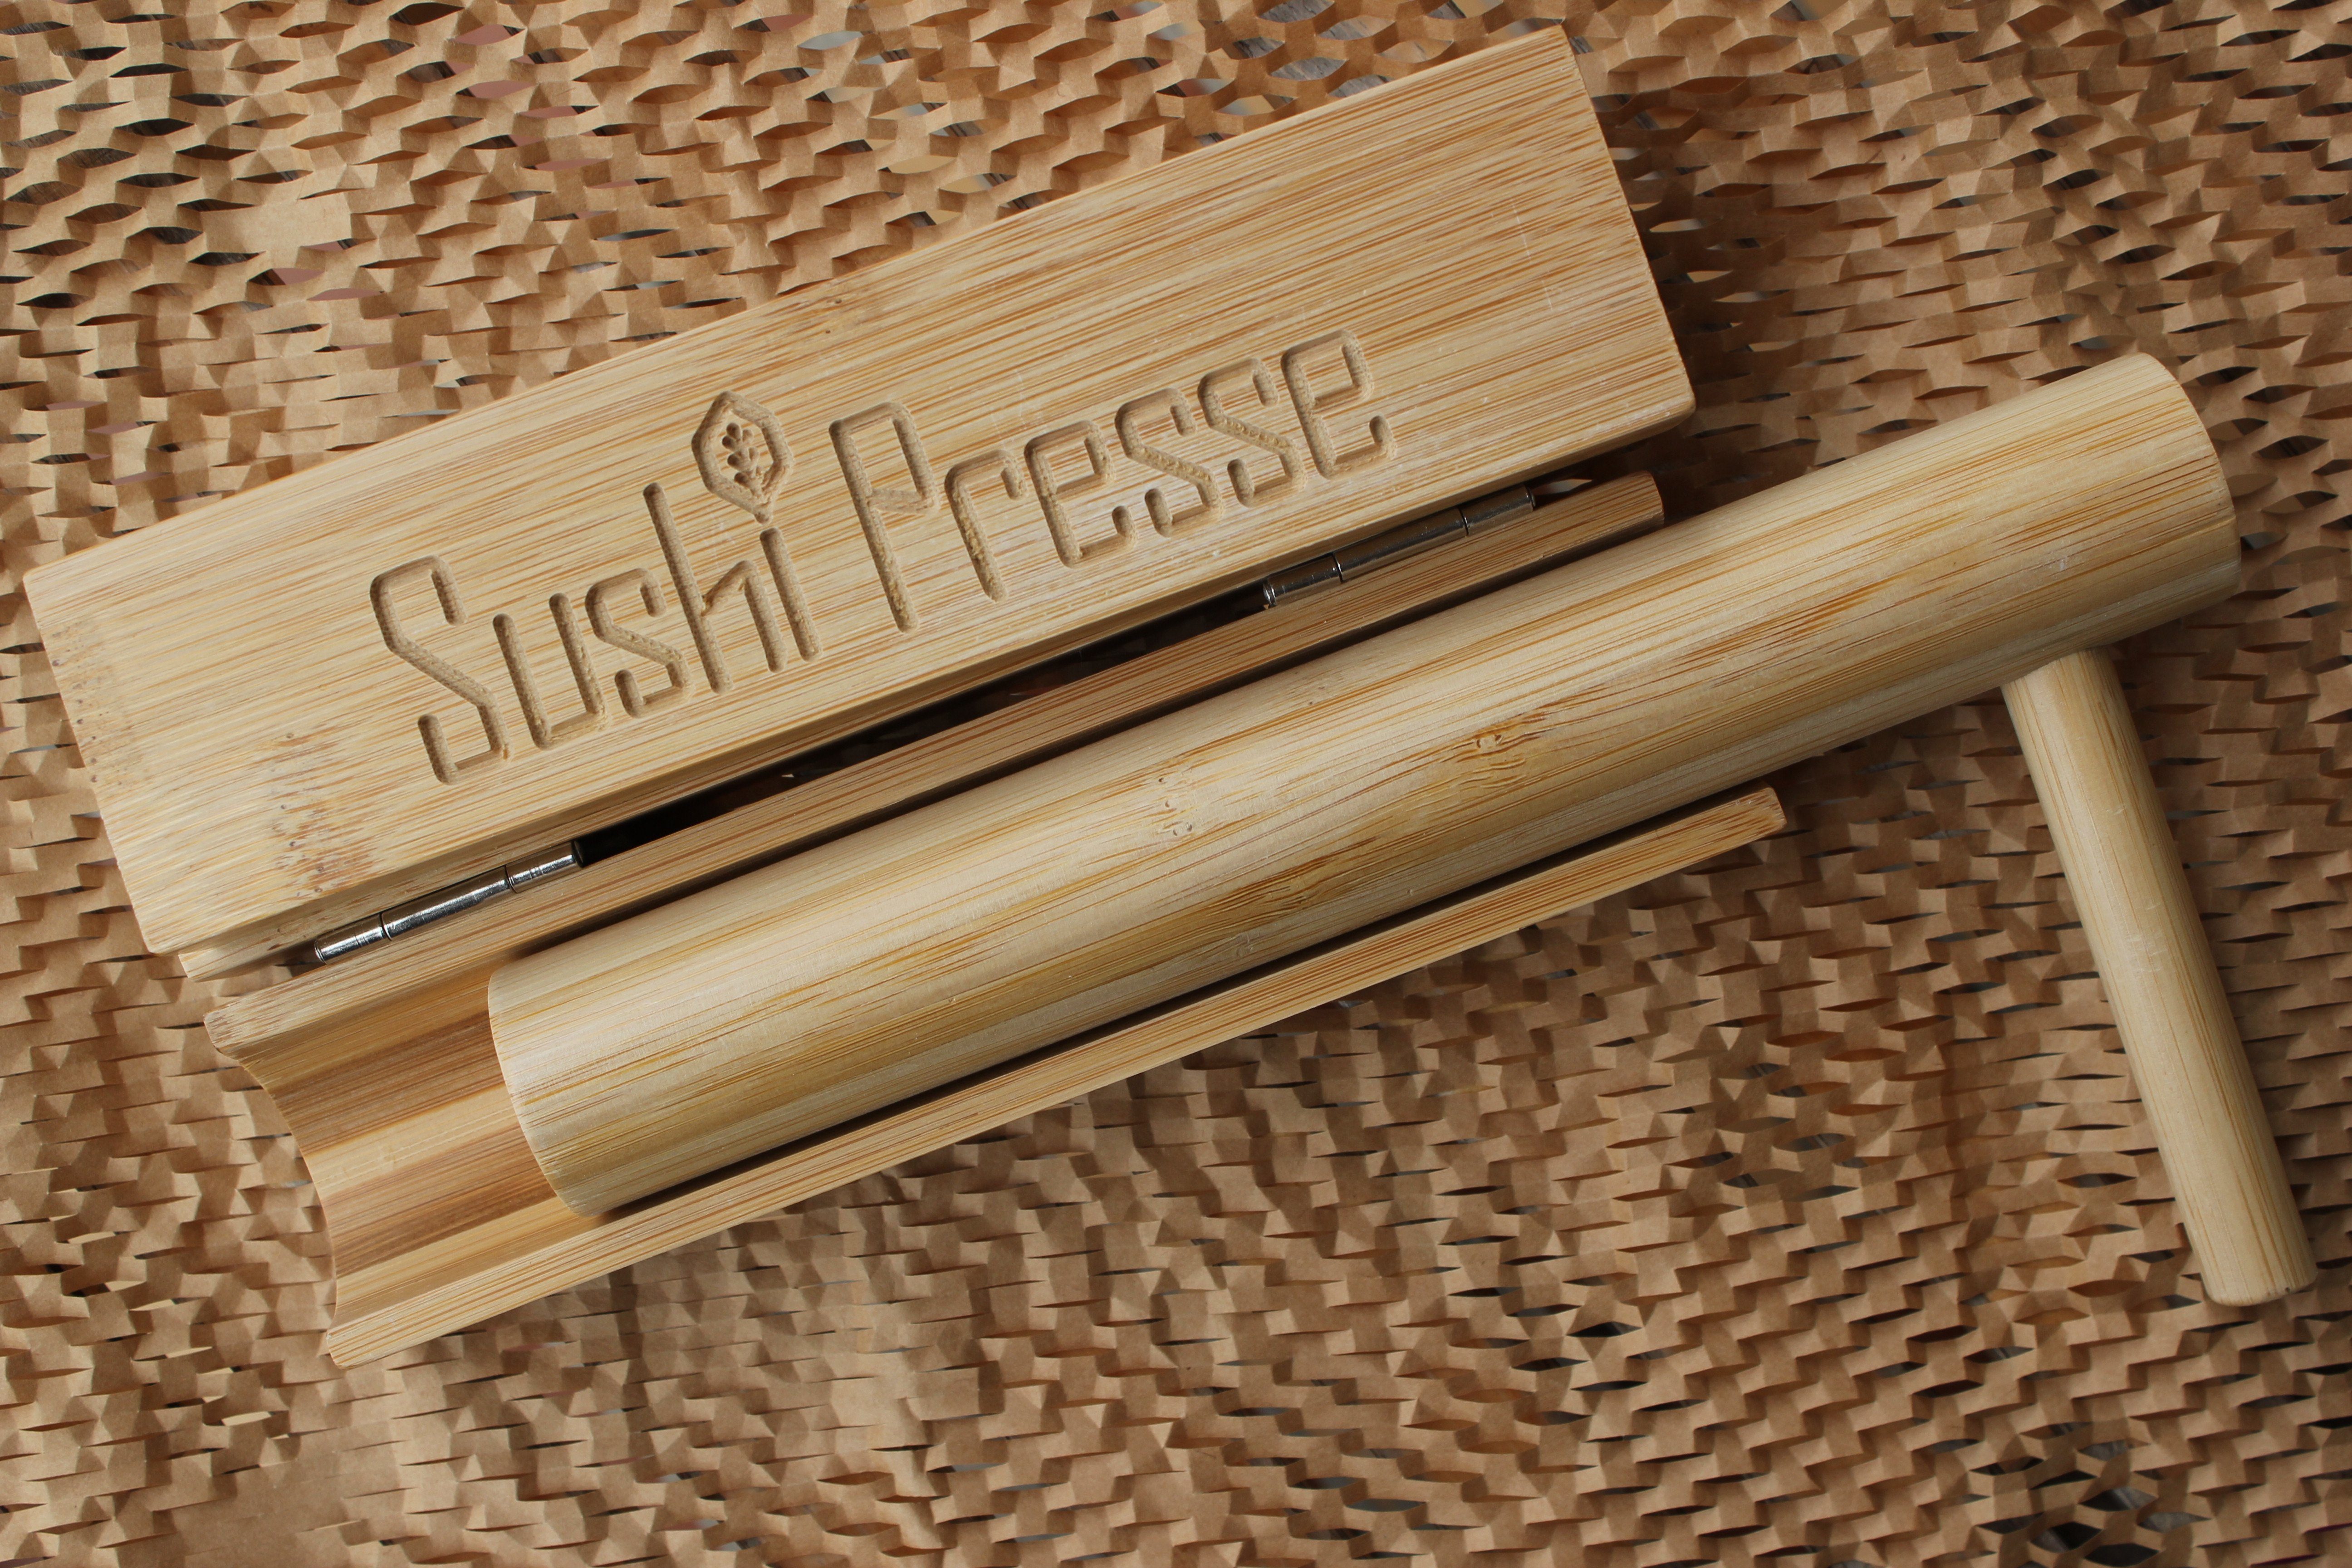 Öko-Freundlich Maker DIY Sushi Susable & Roller, Bambus Maki - Sushi-Roller Nigiri Kit